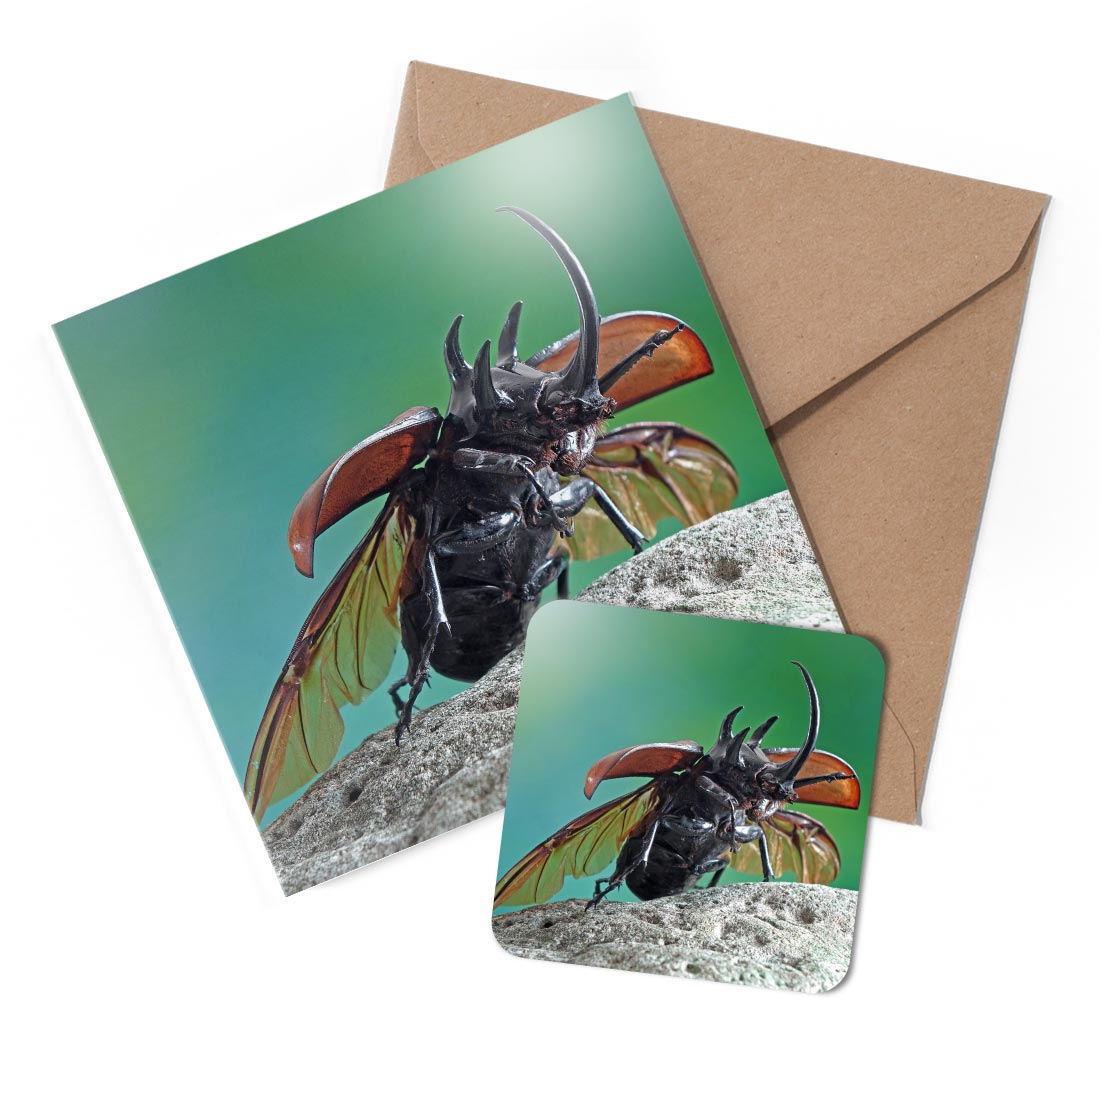 1 x Greeting Card & Coaster Set - Rhinoceros Beetle Insect Biology #51908